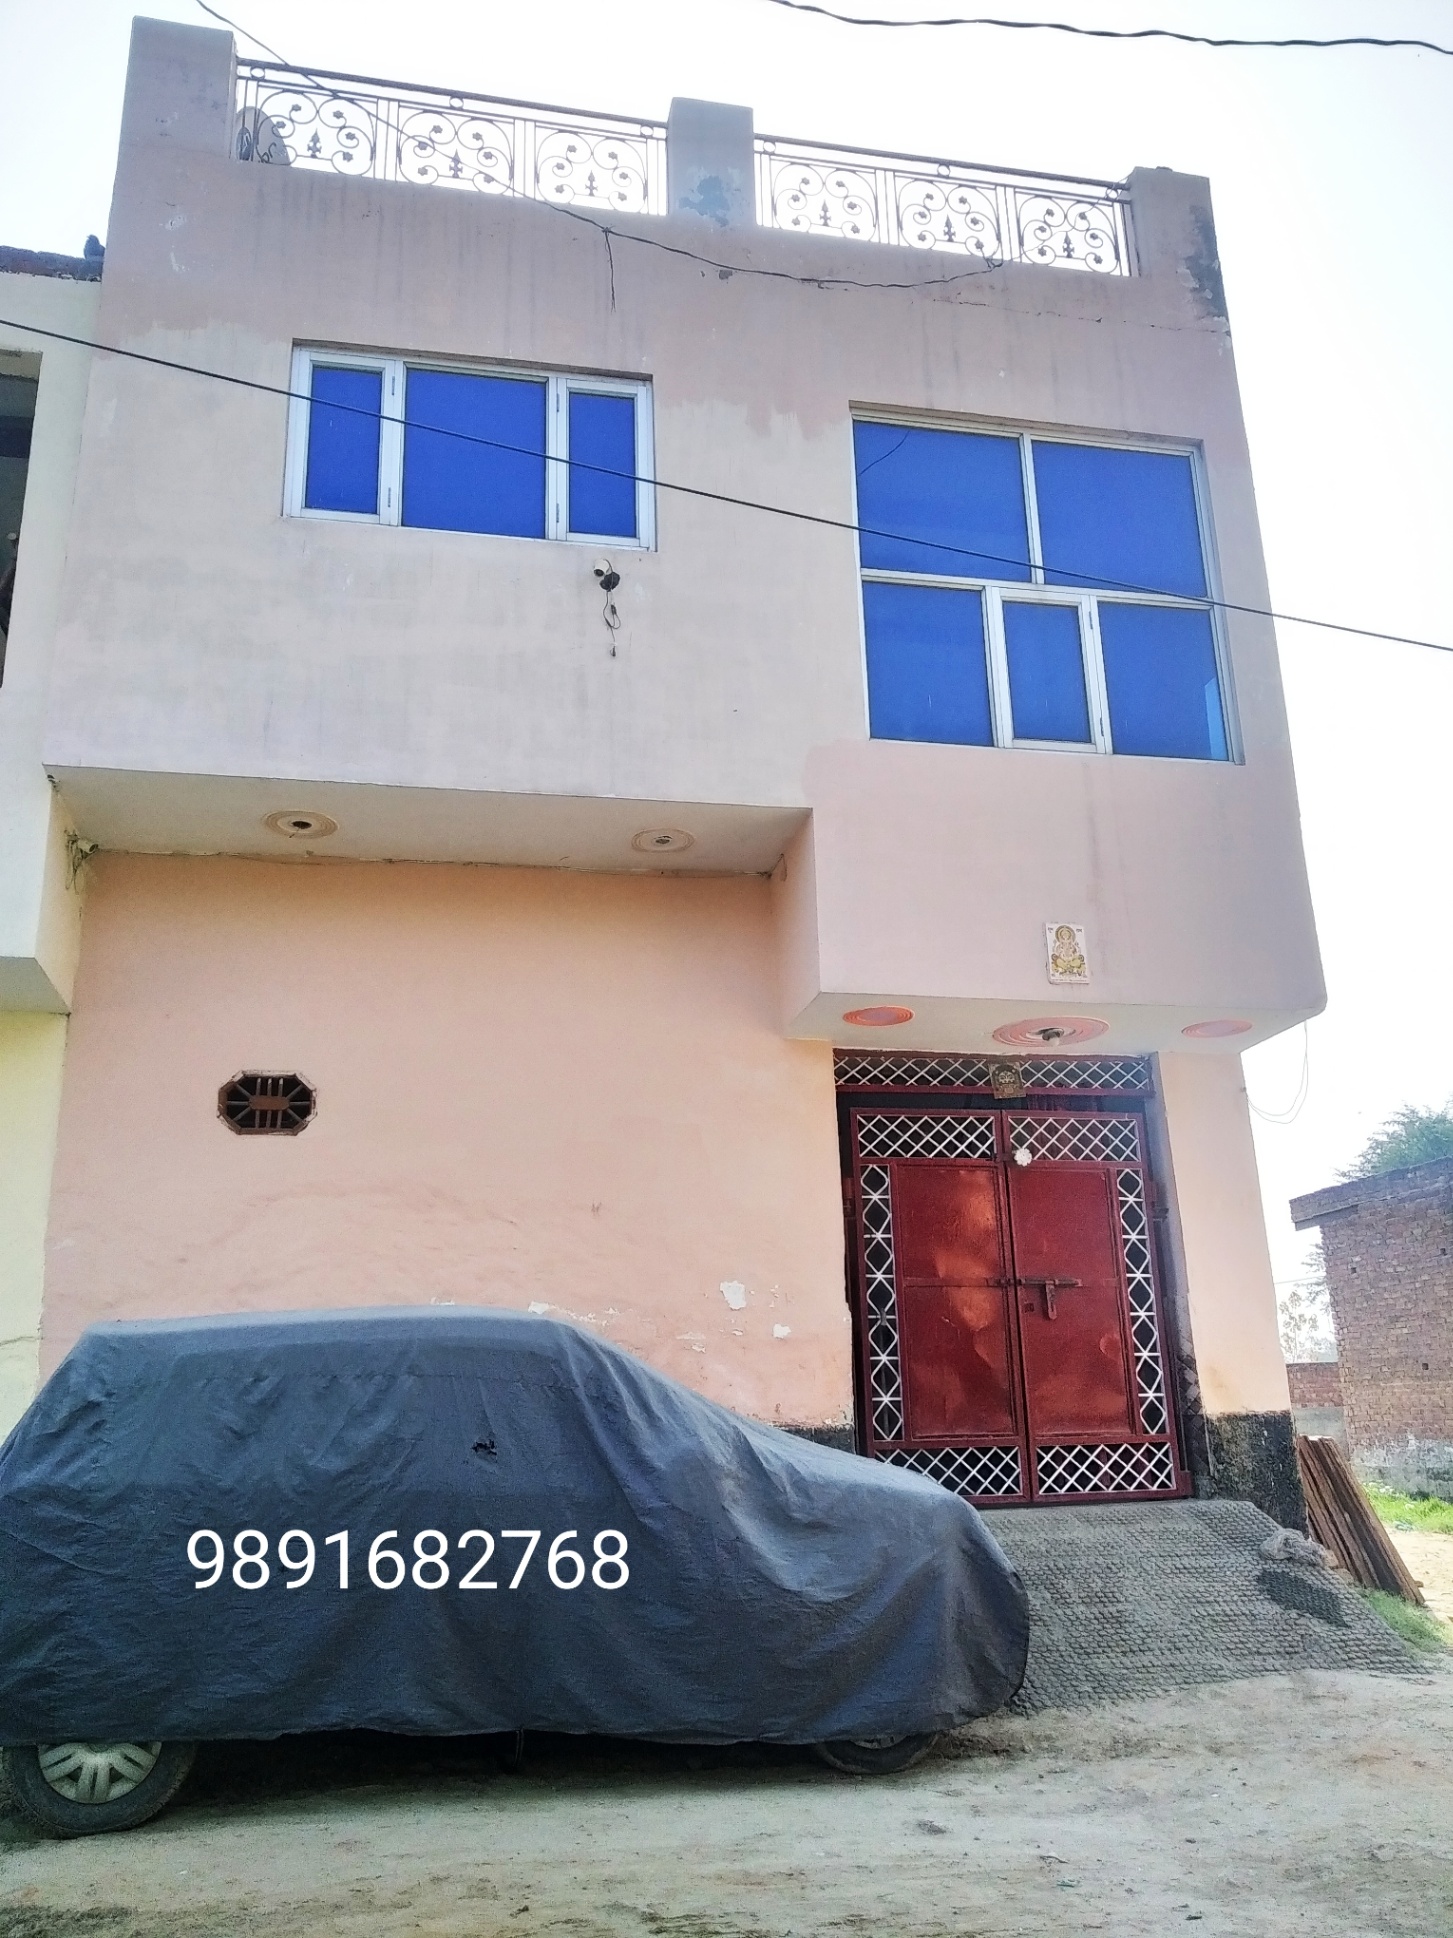 3 Bed/ 1 Bath Sell House/ Bungalow/ Villa; 450 sq. ft. carpet area; 450 sq. ft. lot for sale @Kailash nagar